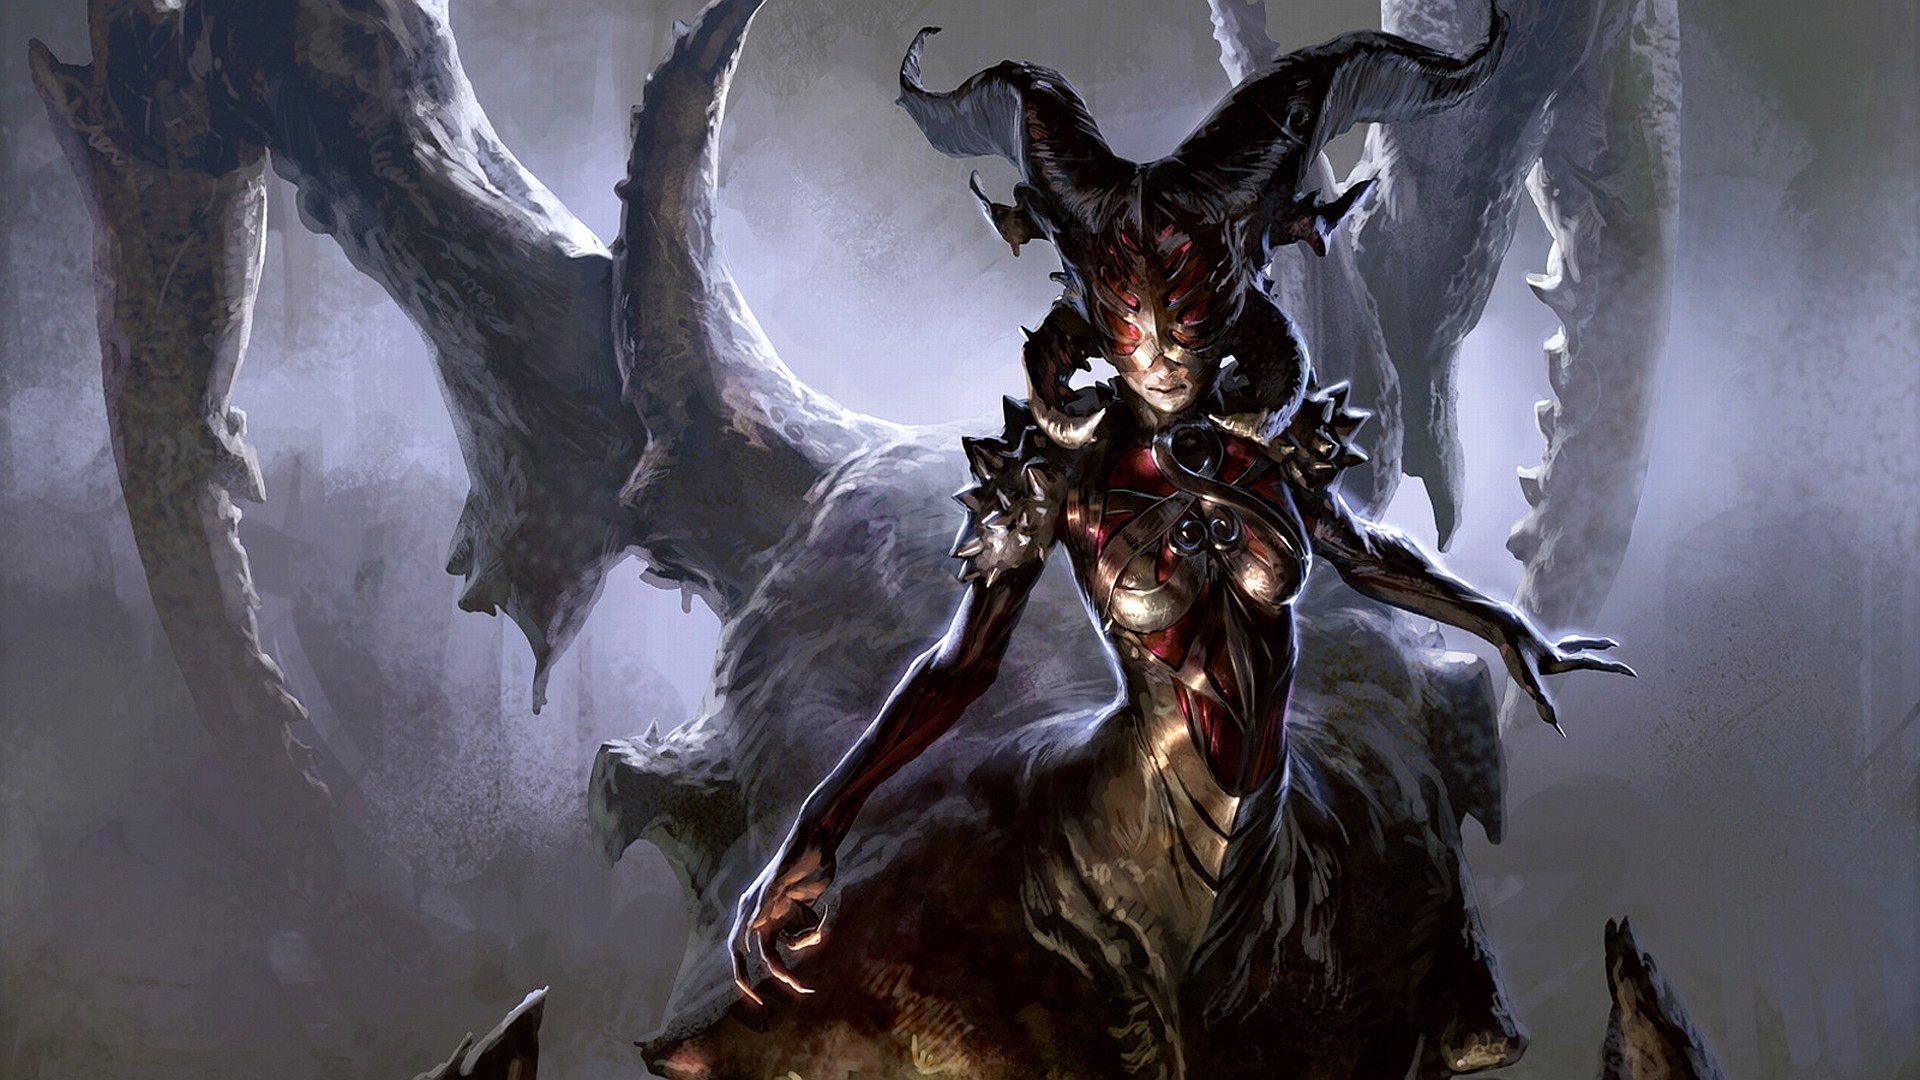 General 1920x1080 Magic: The Gathering fantasy art creature horns claws artwork video games video game art